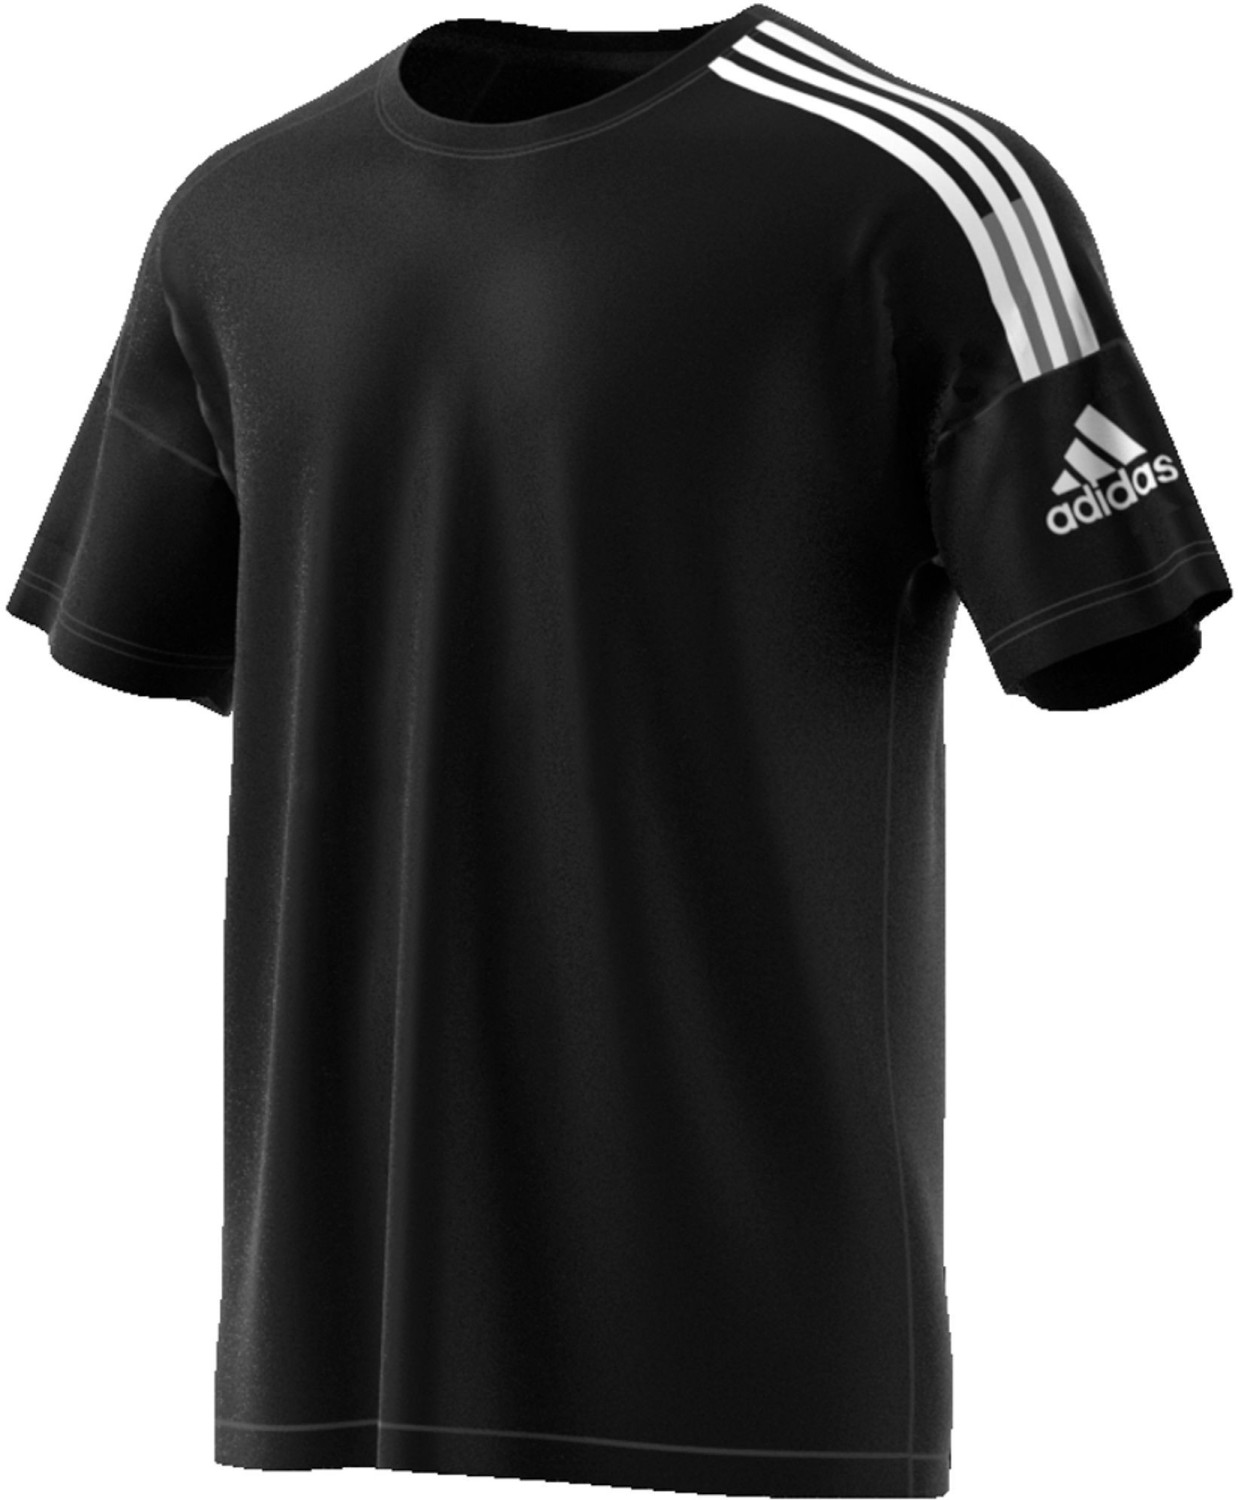 Adidas Z.N.E. 3-Stripes T-Shirt black